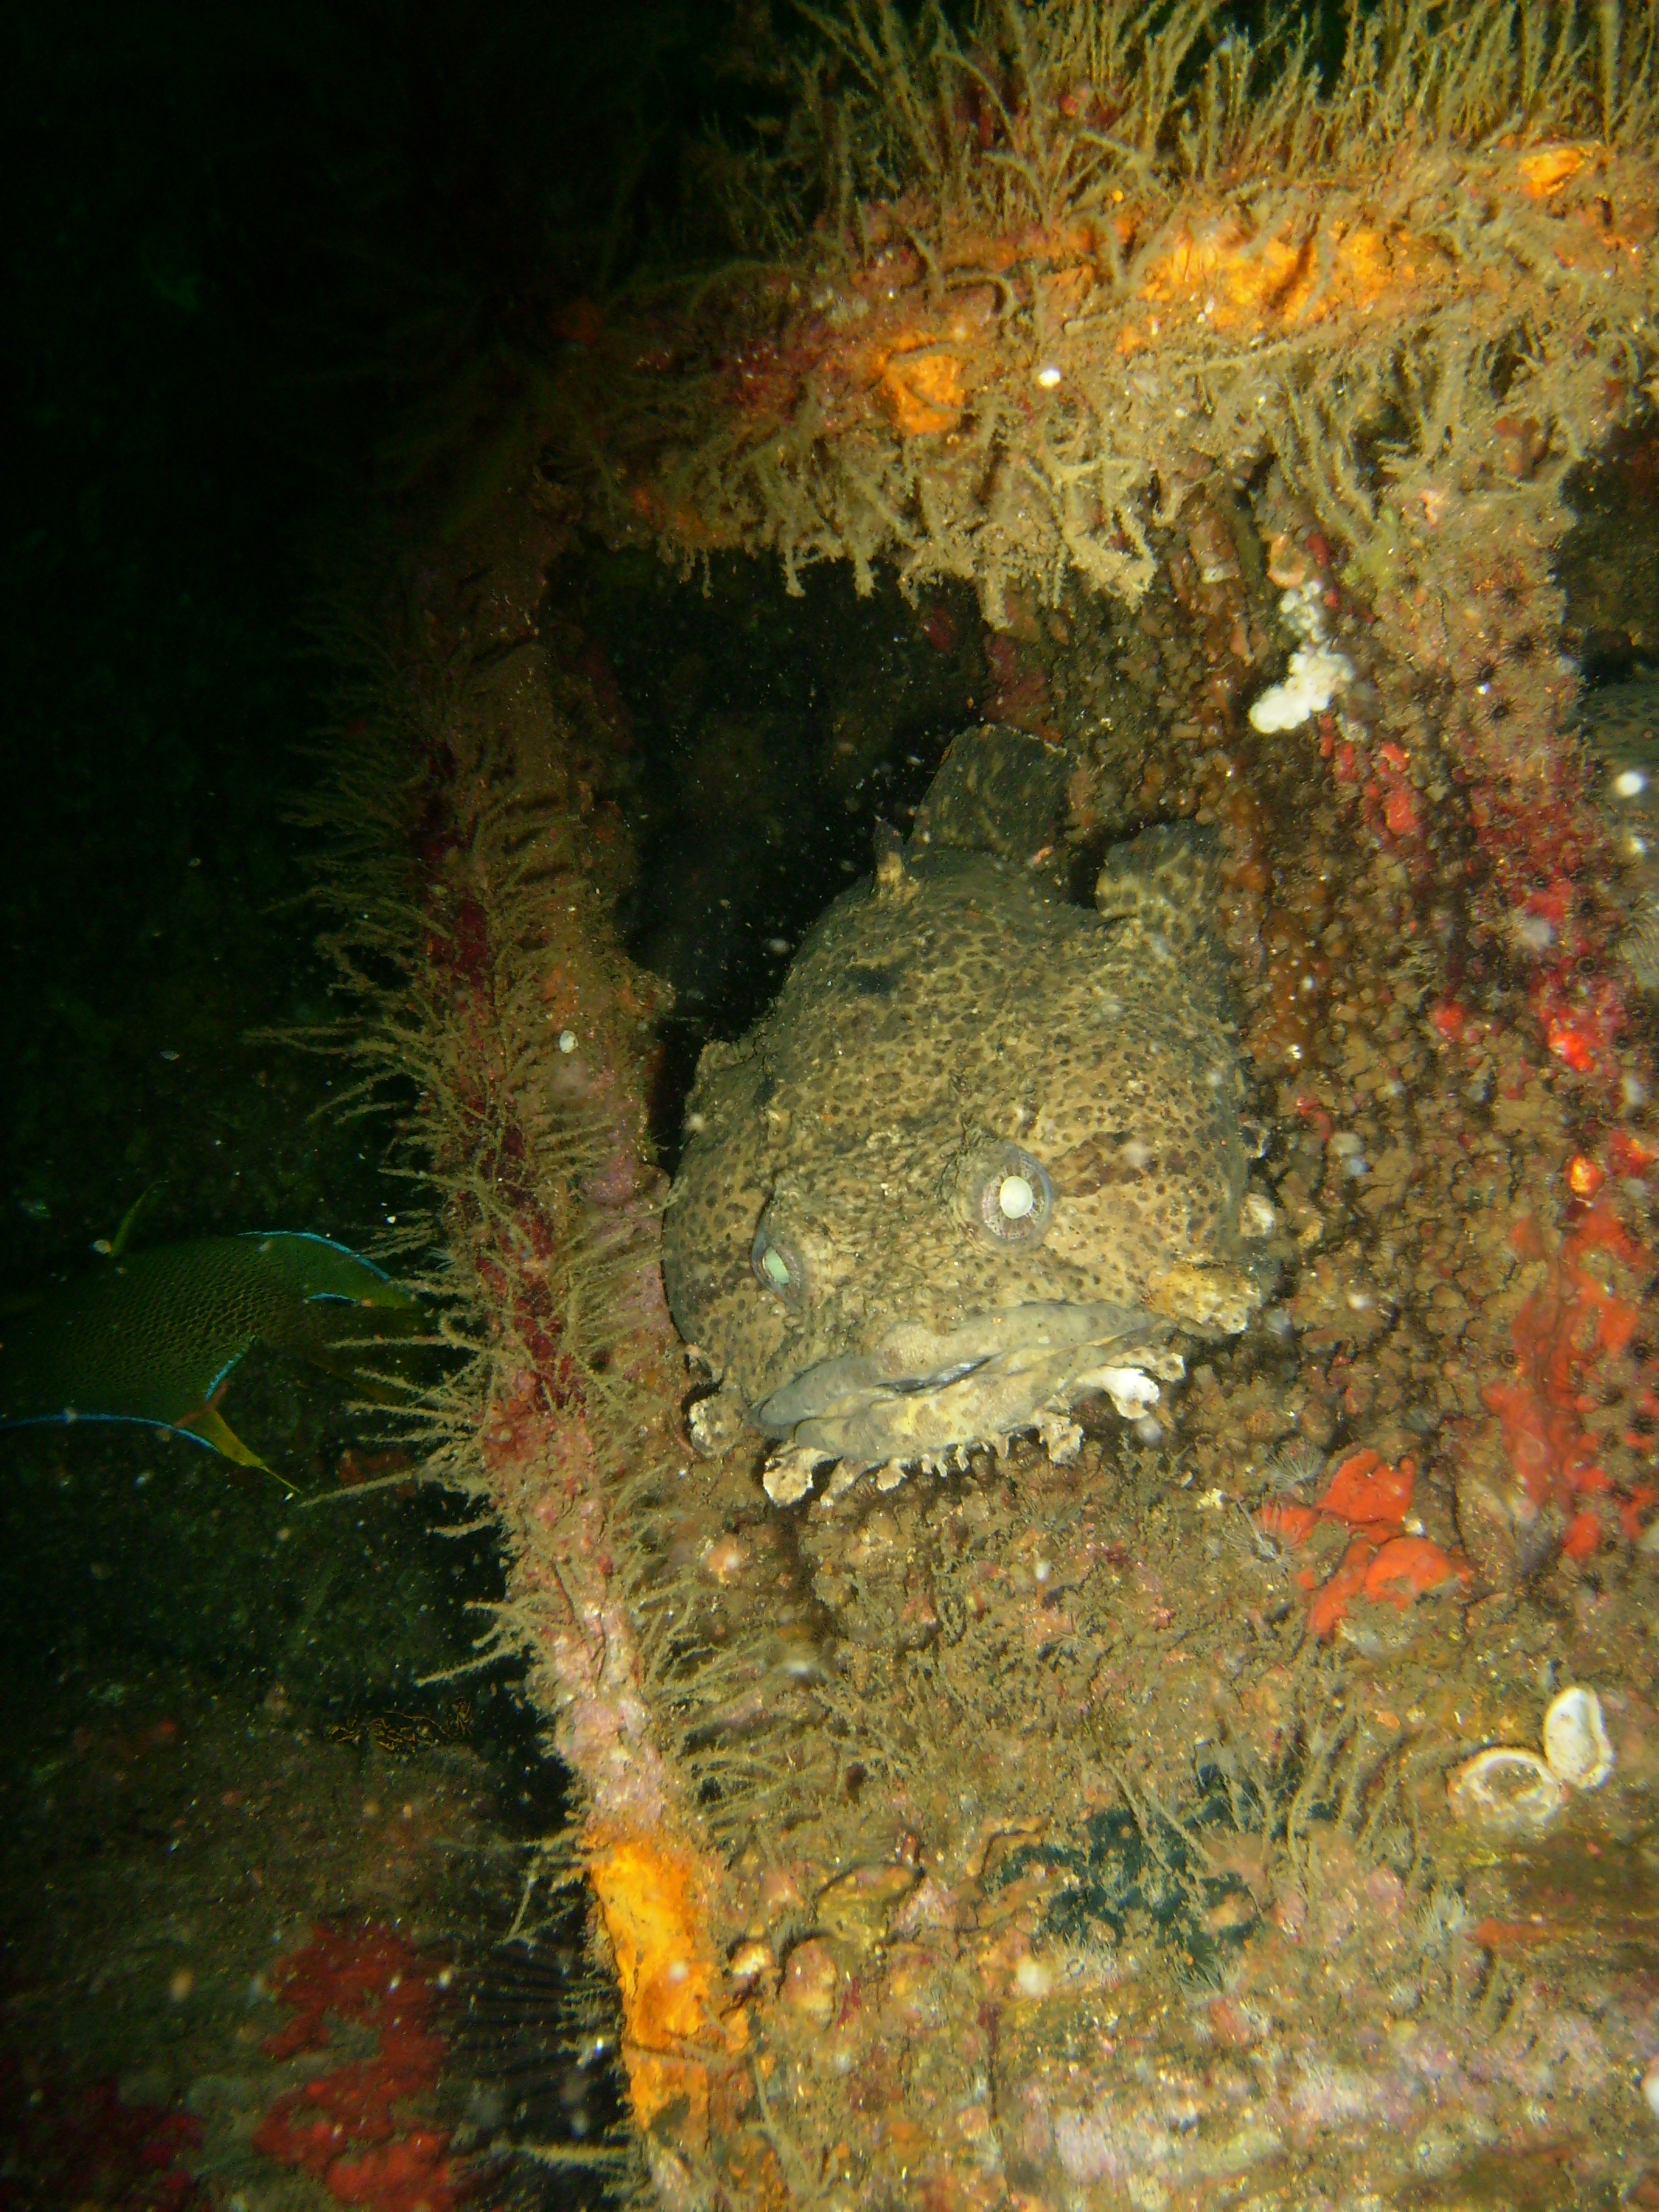 Gulf toafish hiding along PCB bridge span